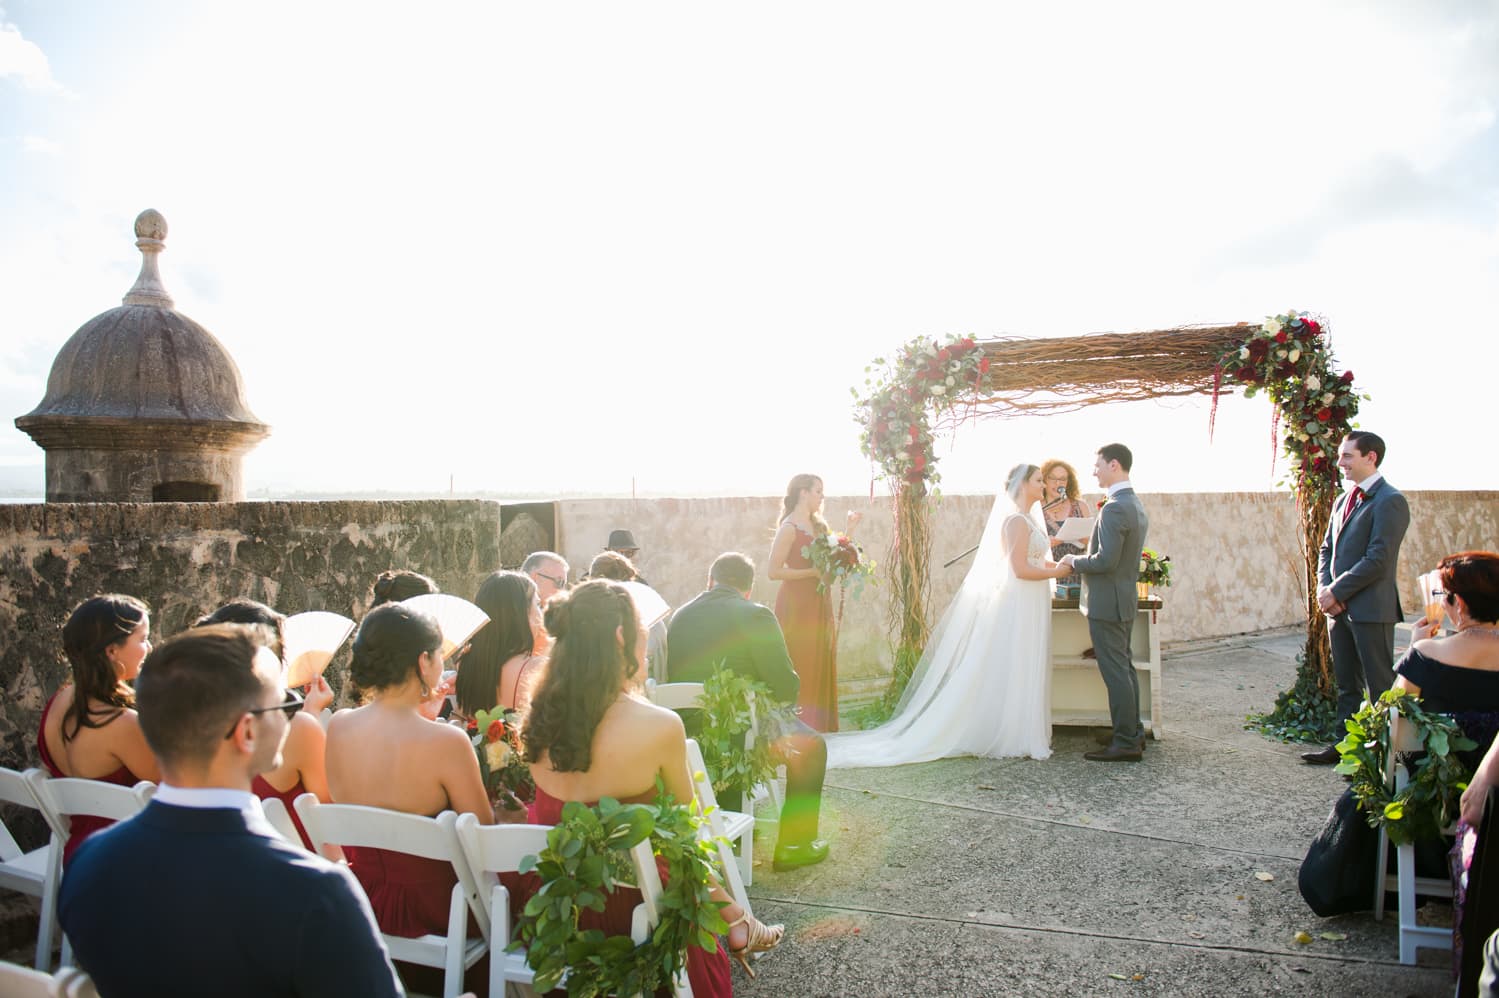 La Rogativa destination wedding ceremony at Old San Juan by photographer Camille Fontanez